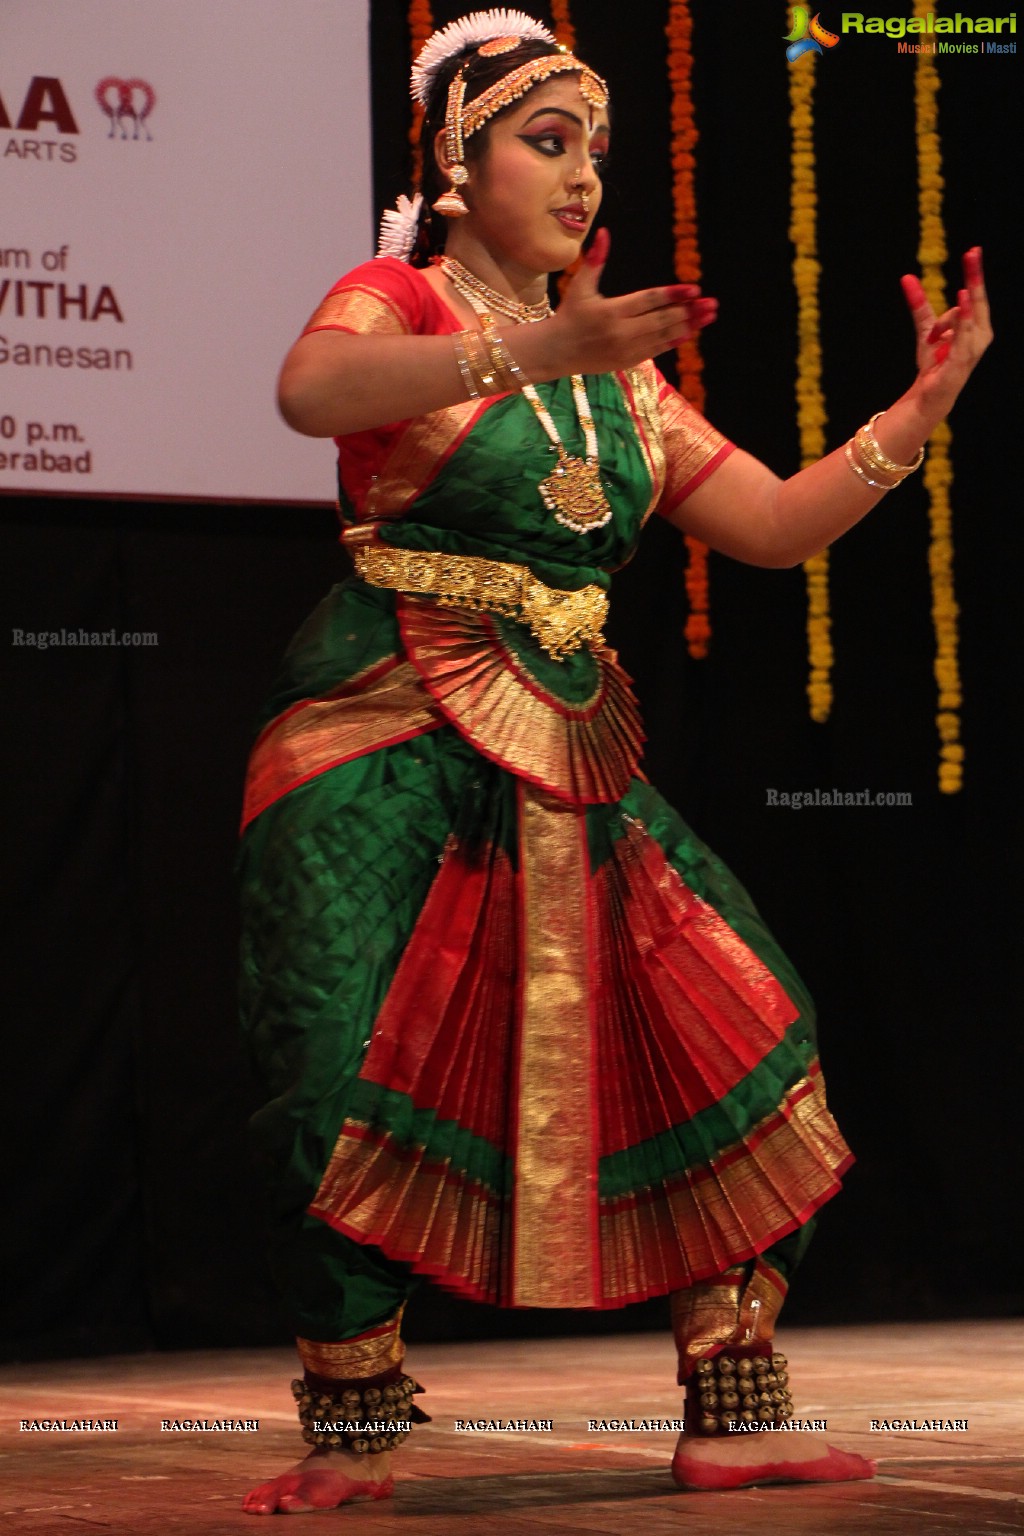 Bharatanatyam Arangetram of Subhanvitha at Ravindra Bharati, Hyderabad